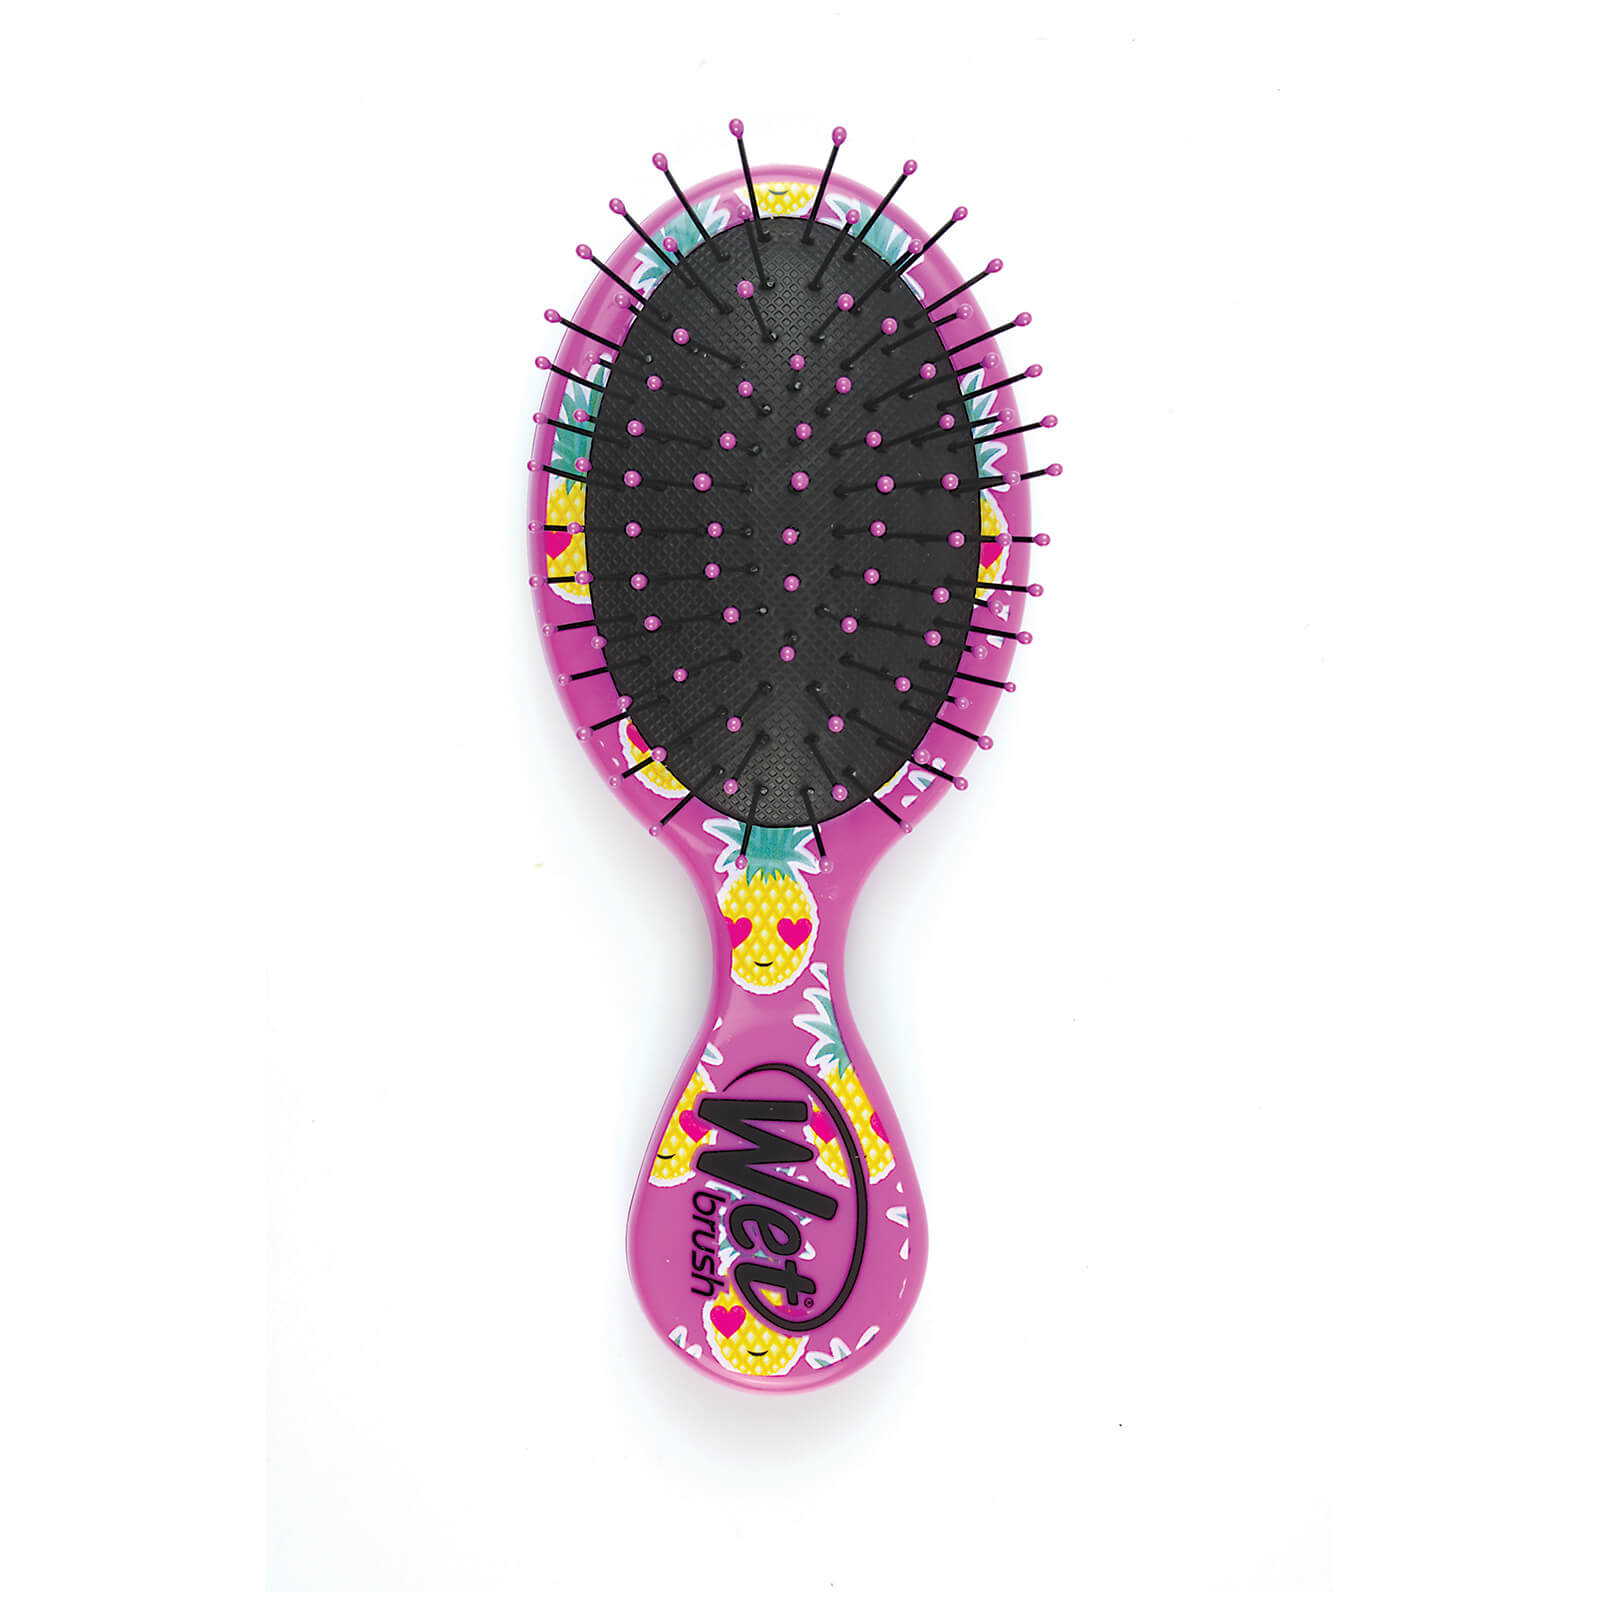 Minicepillo para el cabello Happy Hair Smiley de WetBrush - Pineapple